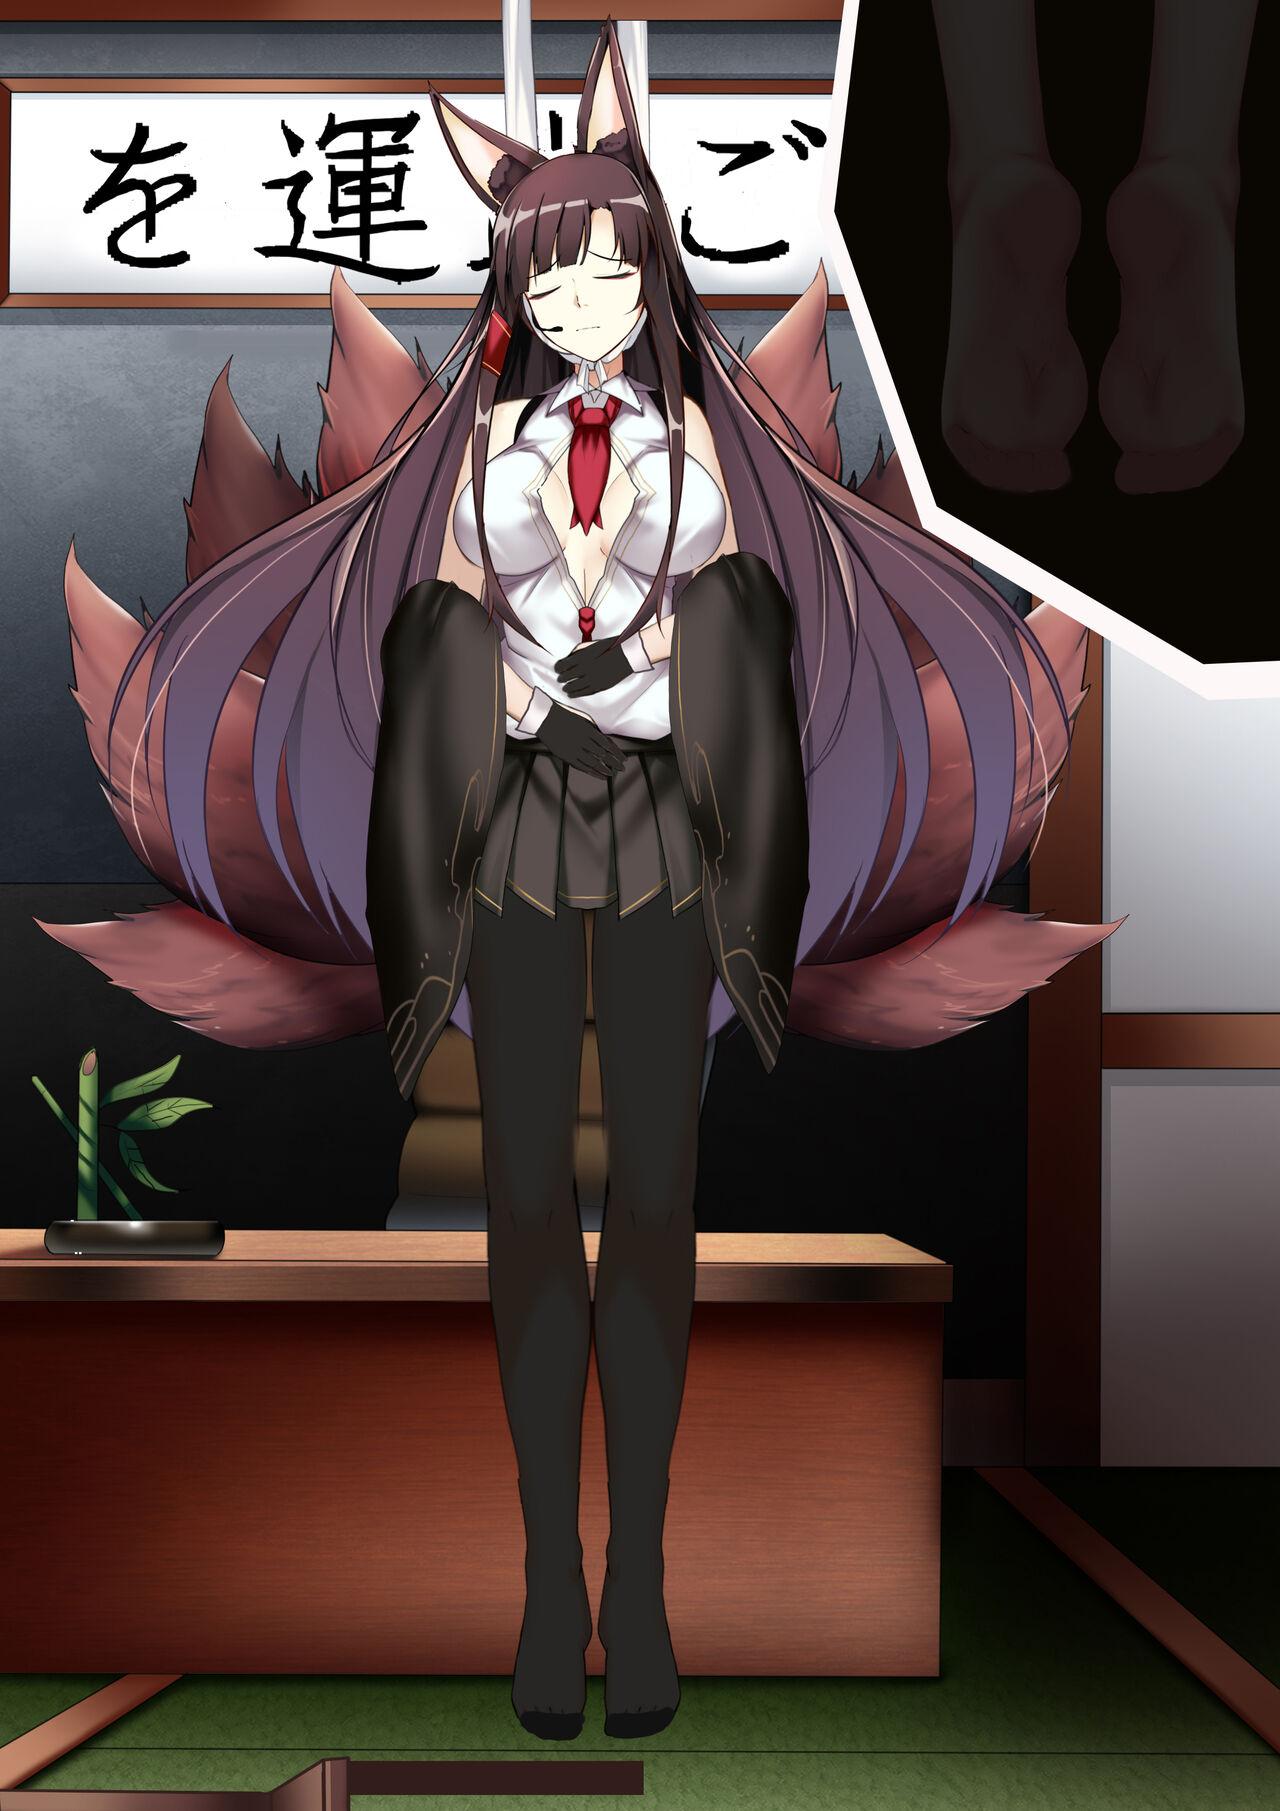 Akagi hanged herself in her office 33